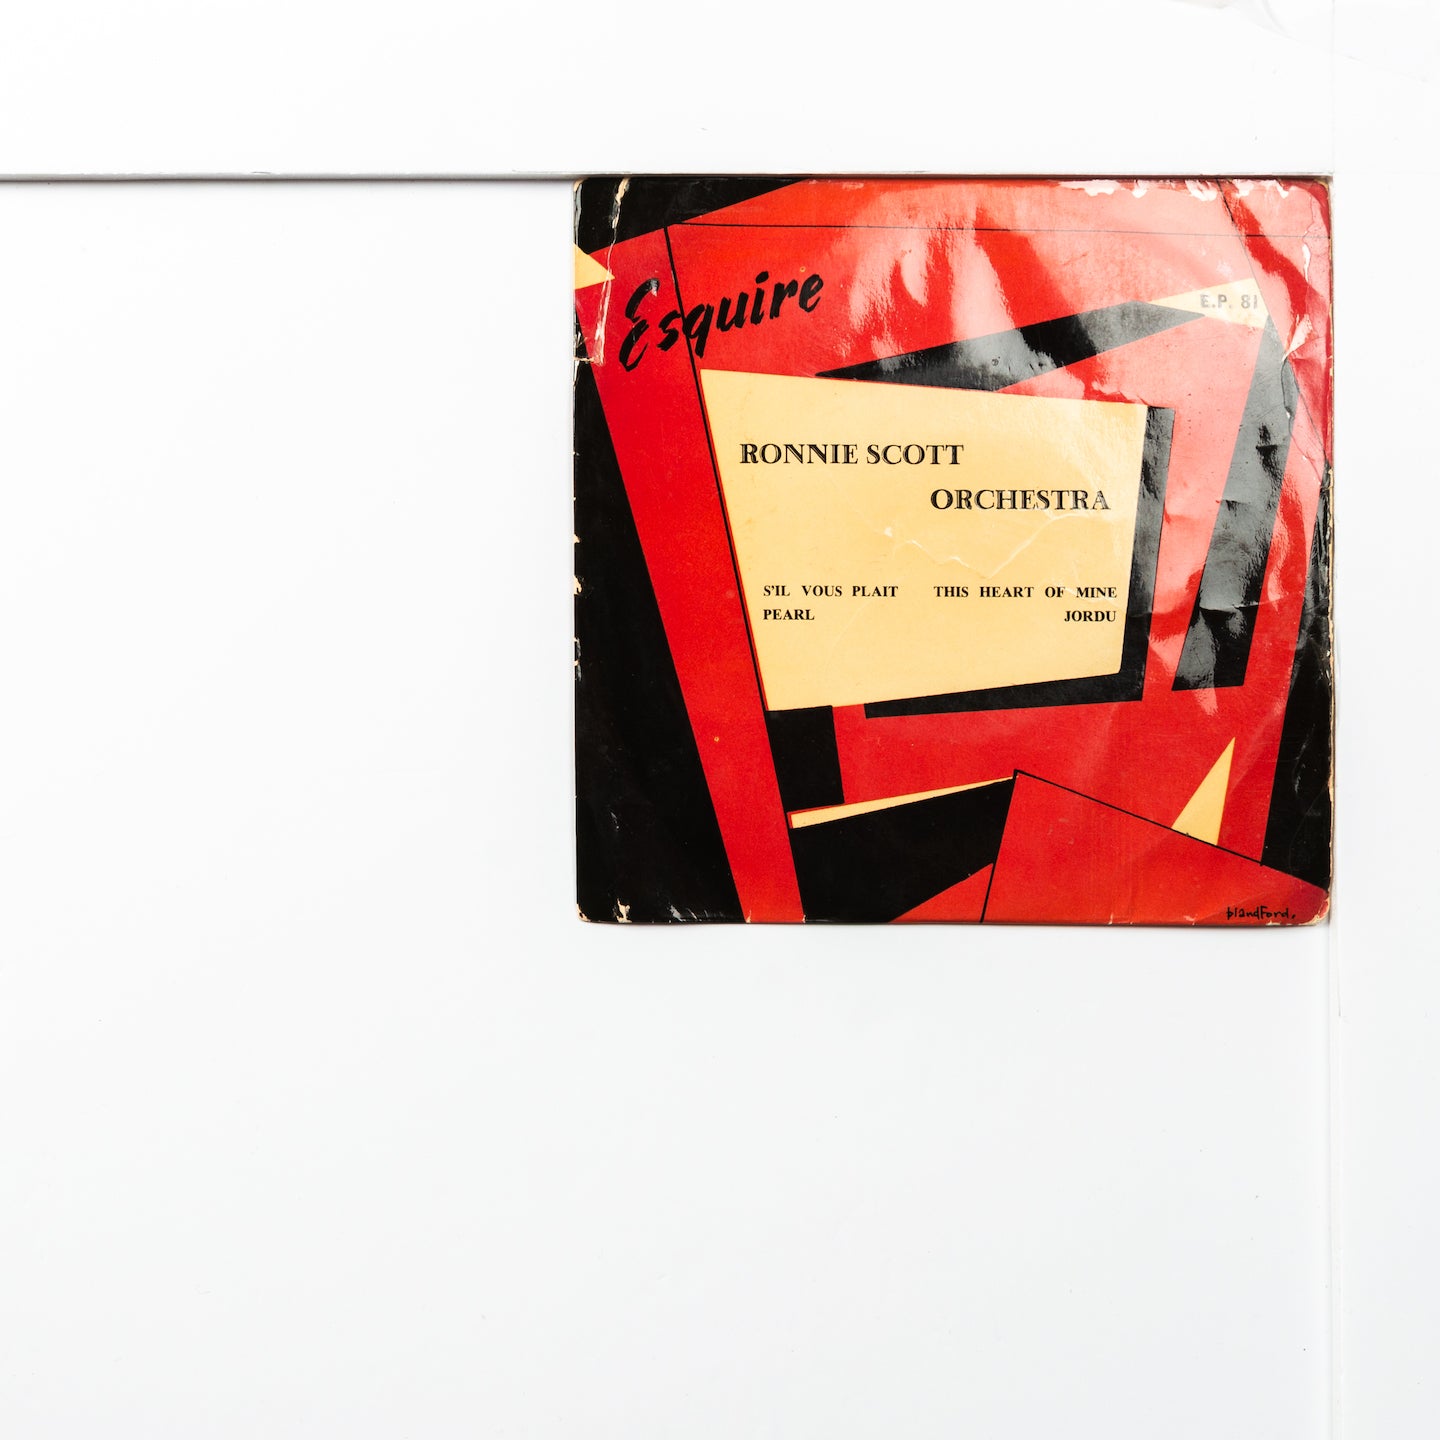 Ronnie Scott   Esquire EP81   Pearl (3.05)